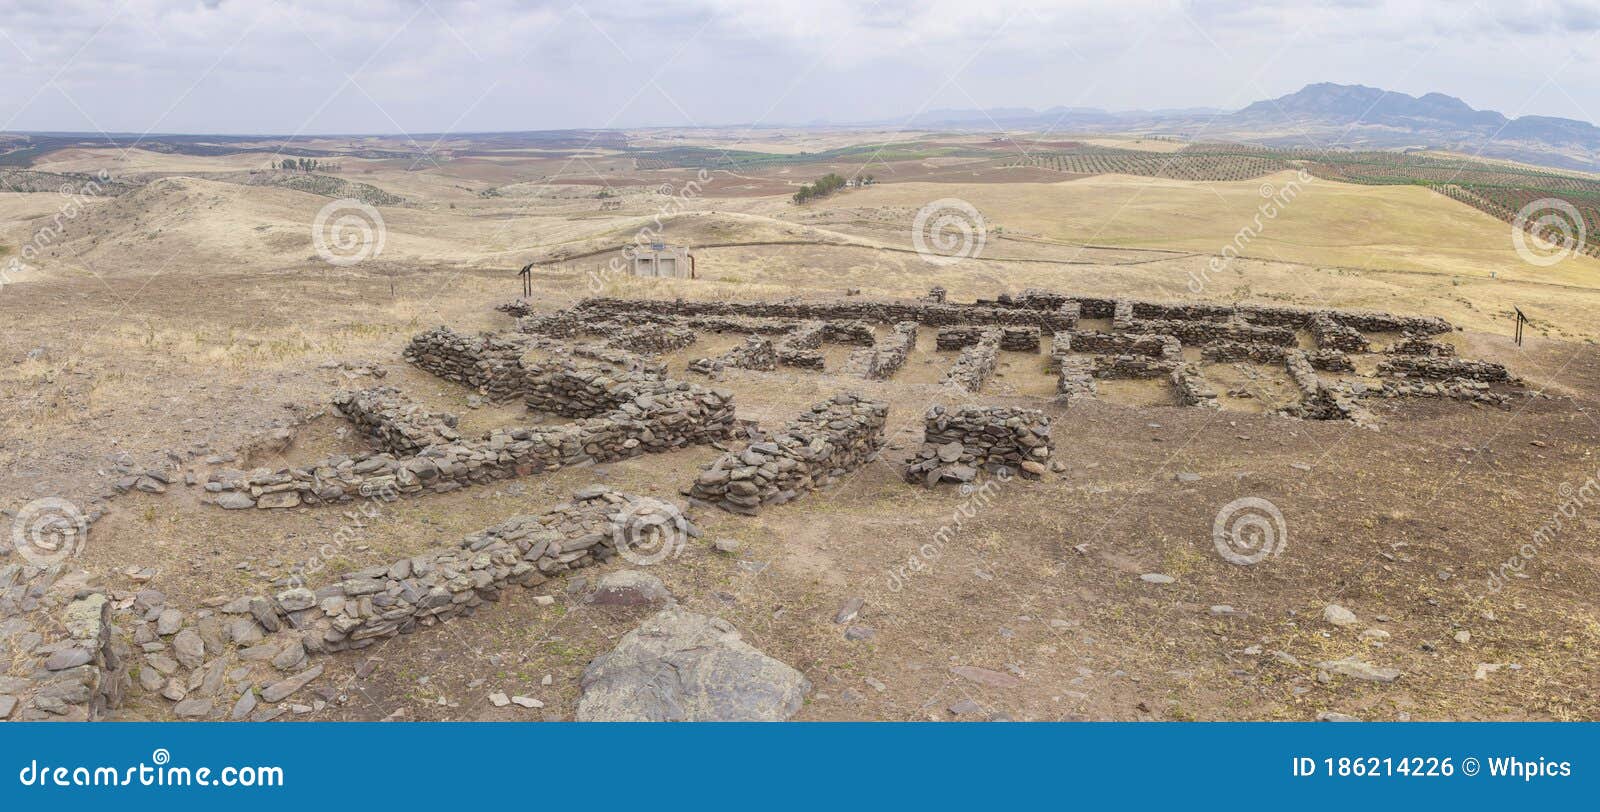 hornachuelos houses. archaeological site at ribera del fresno, spain